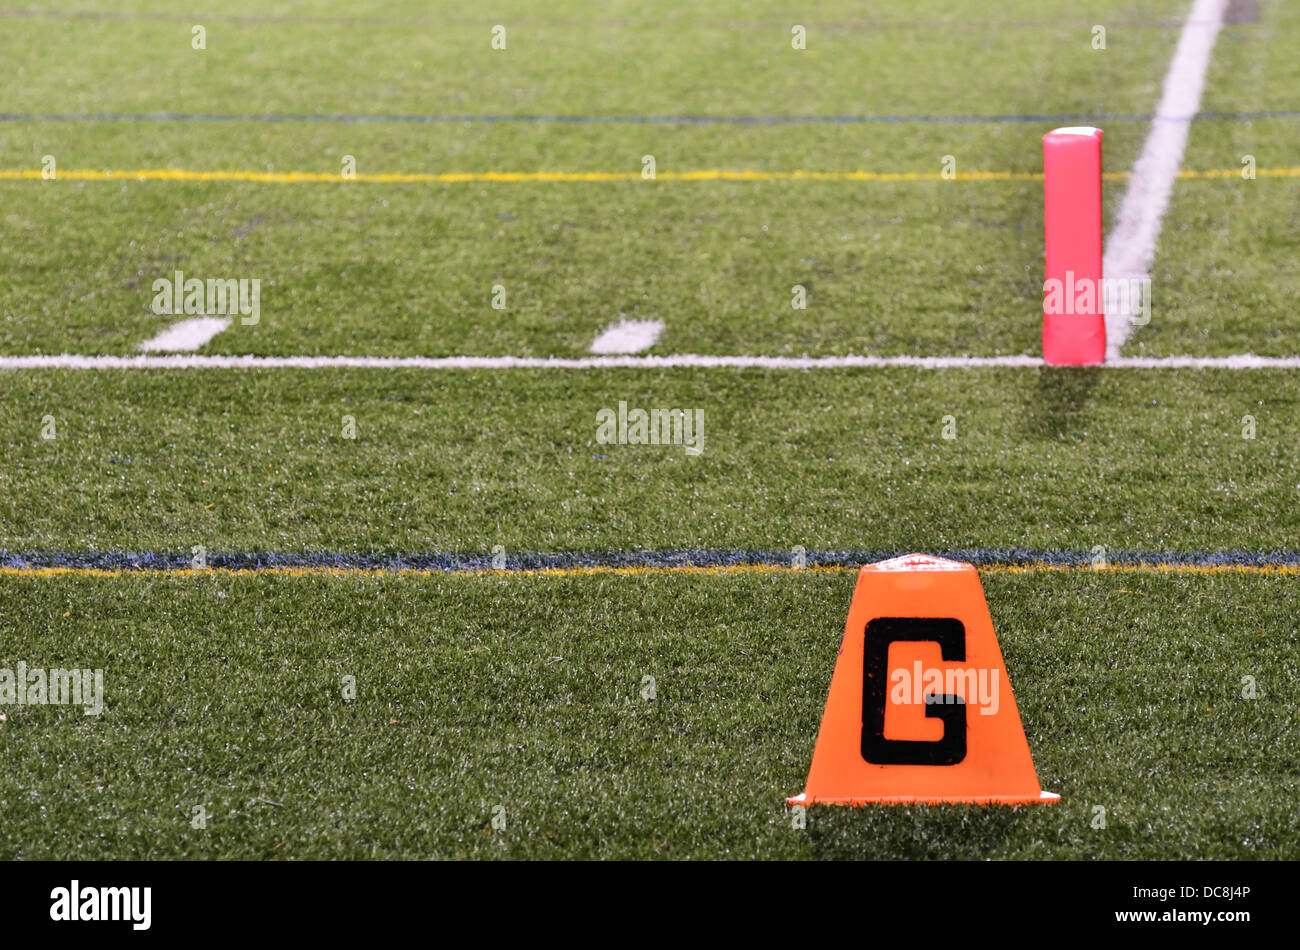 Goal line on an American football field Stock Photo